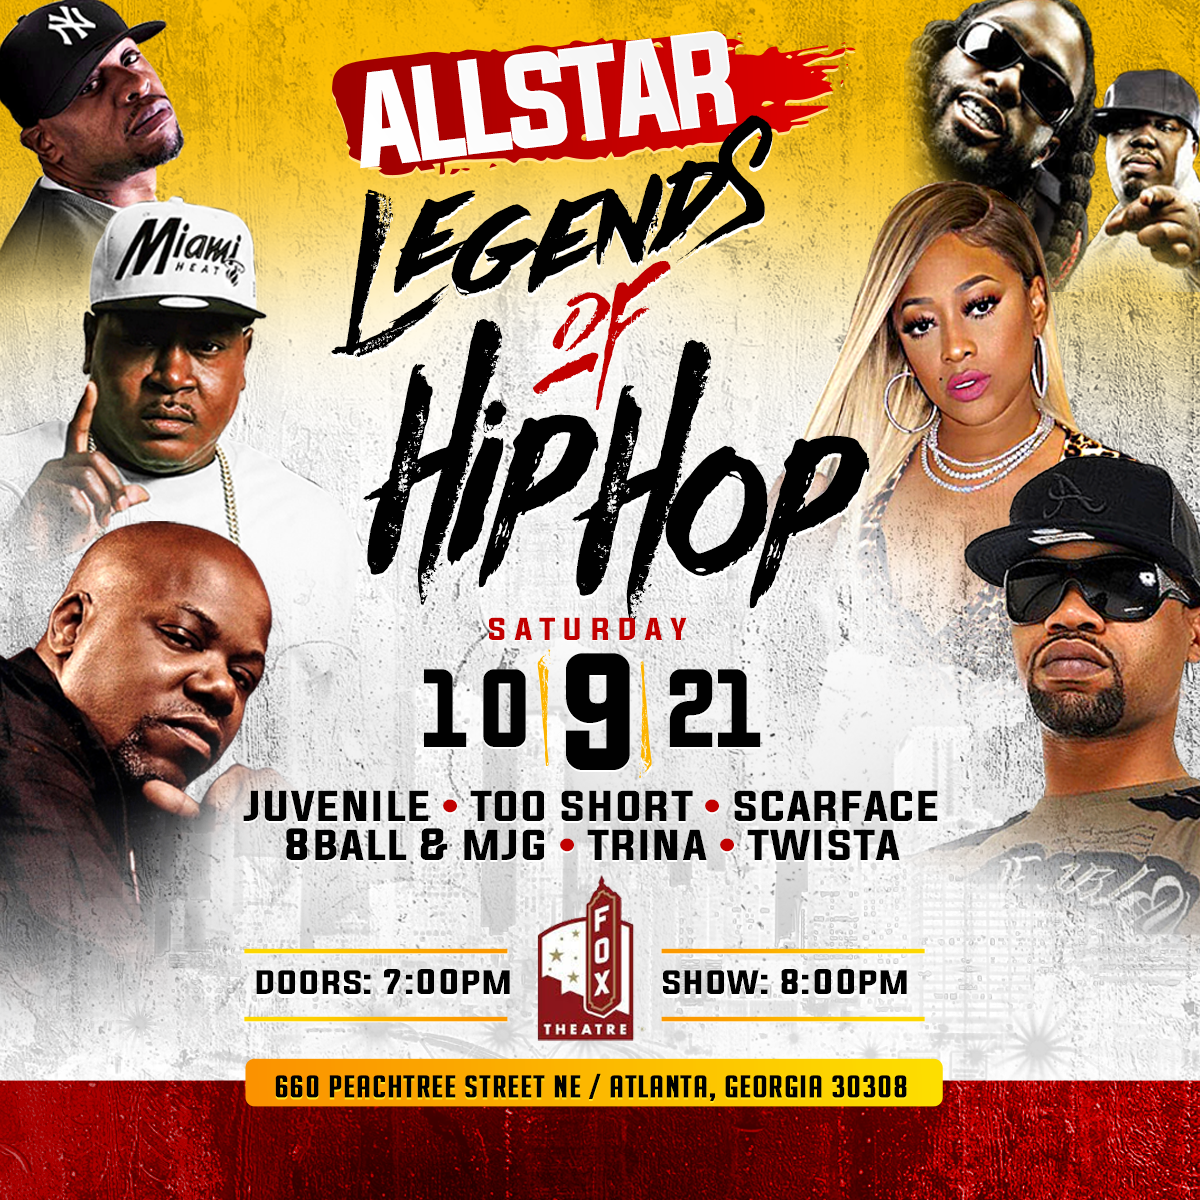 Allstar Legends of Hip Hop Fox Theatre